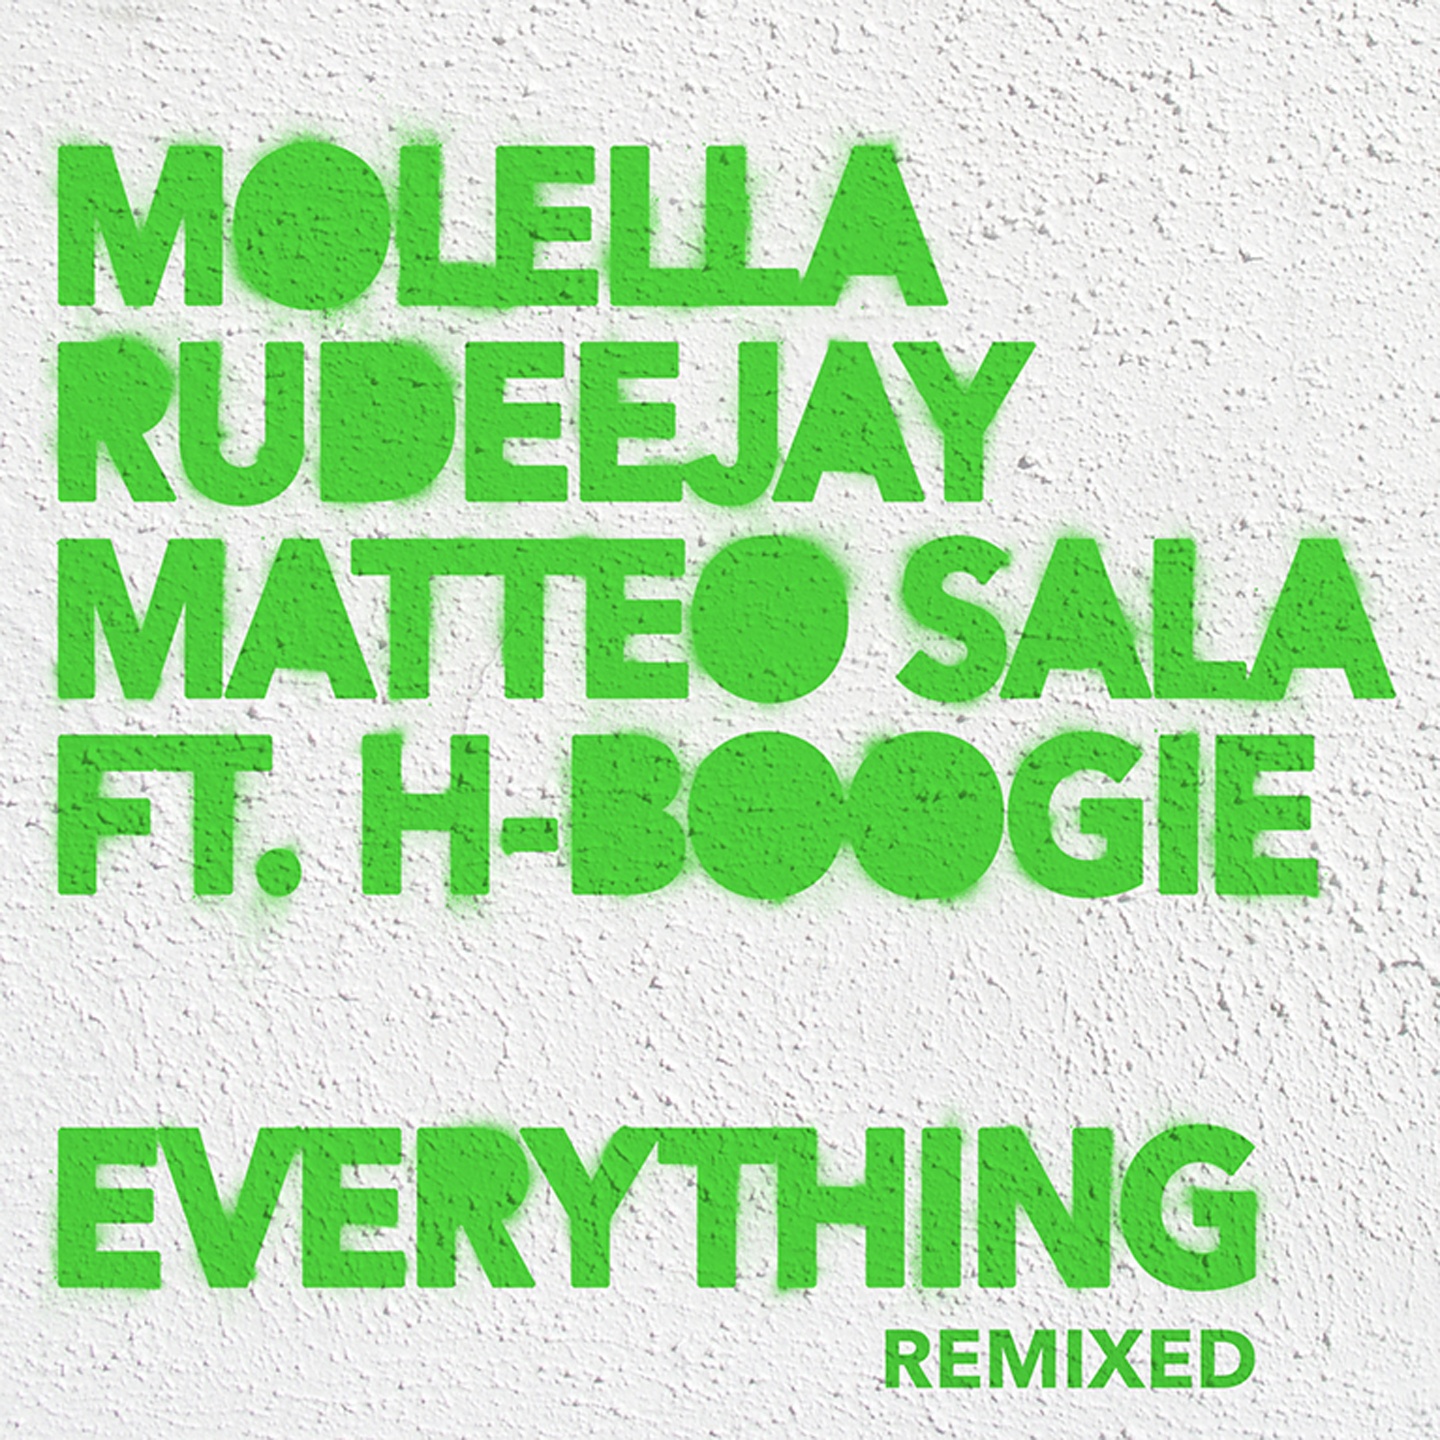 Everything (Remixed)